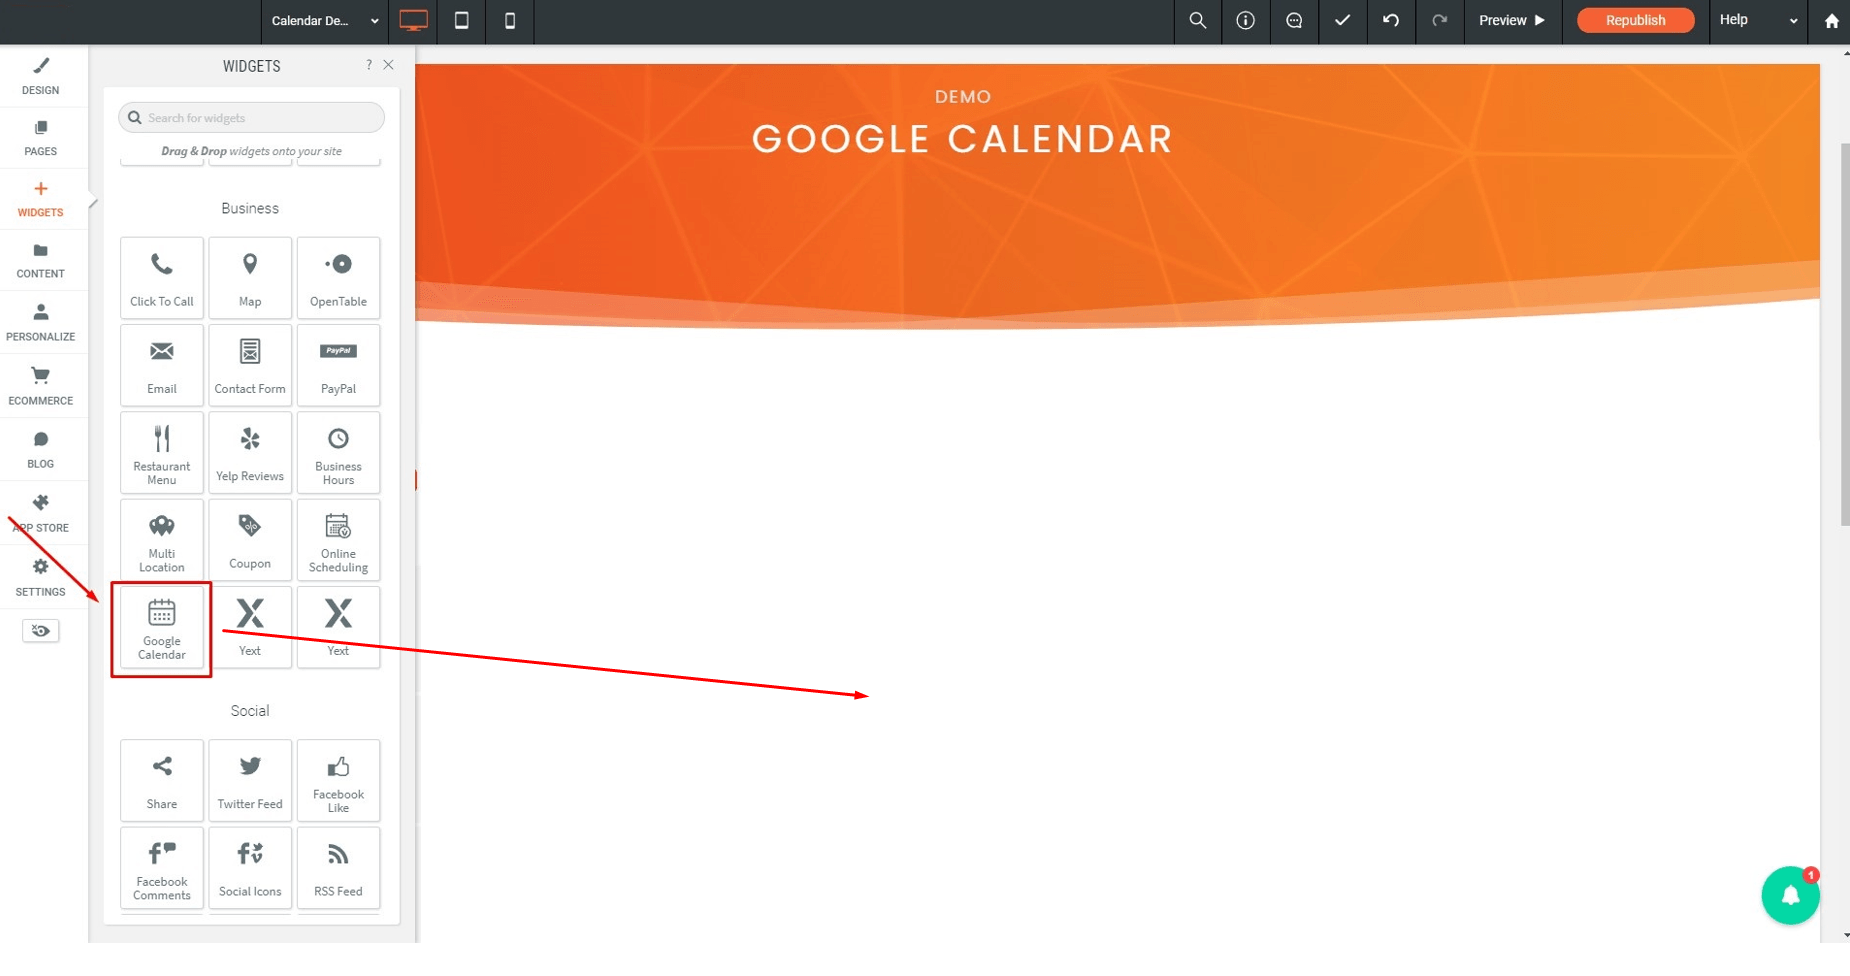 the Google Calendar widget